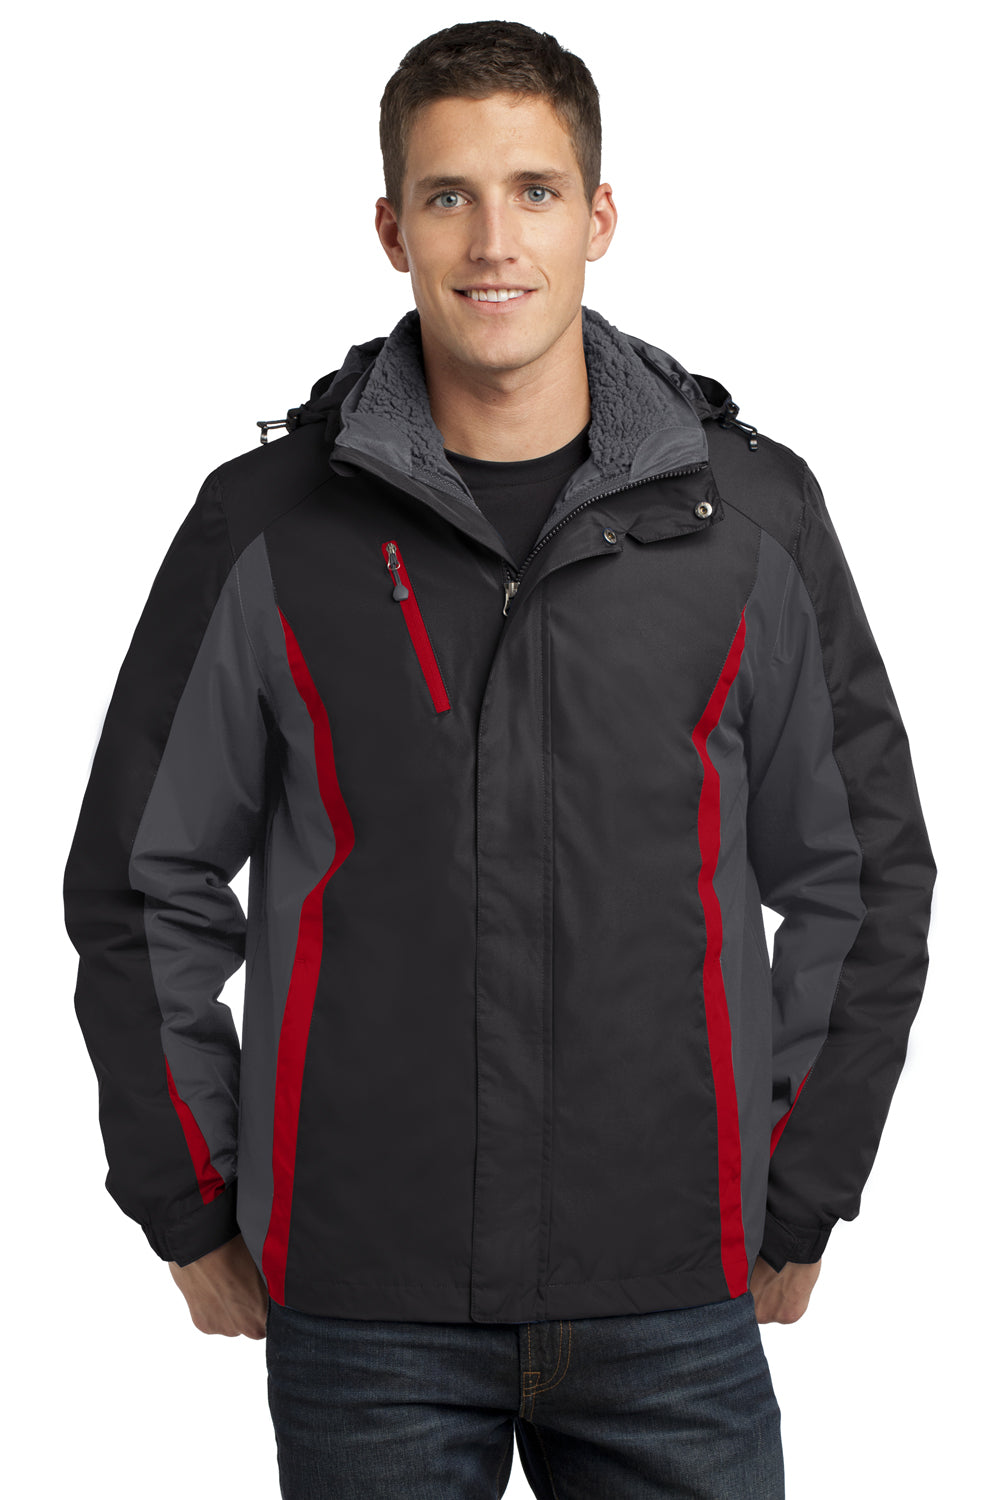 Port Authority J321 Mens 3-in-1 Wind & Water Resistant Full Zip Hooded Jacket Black/Grey/Red Front